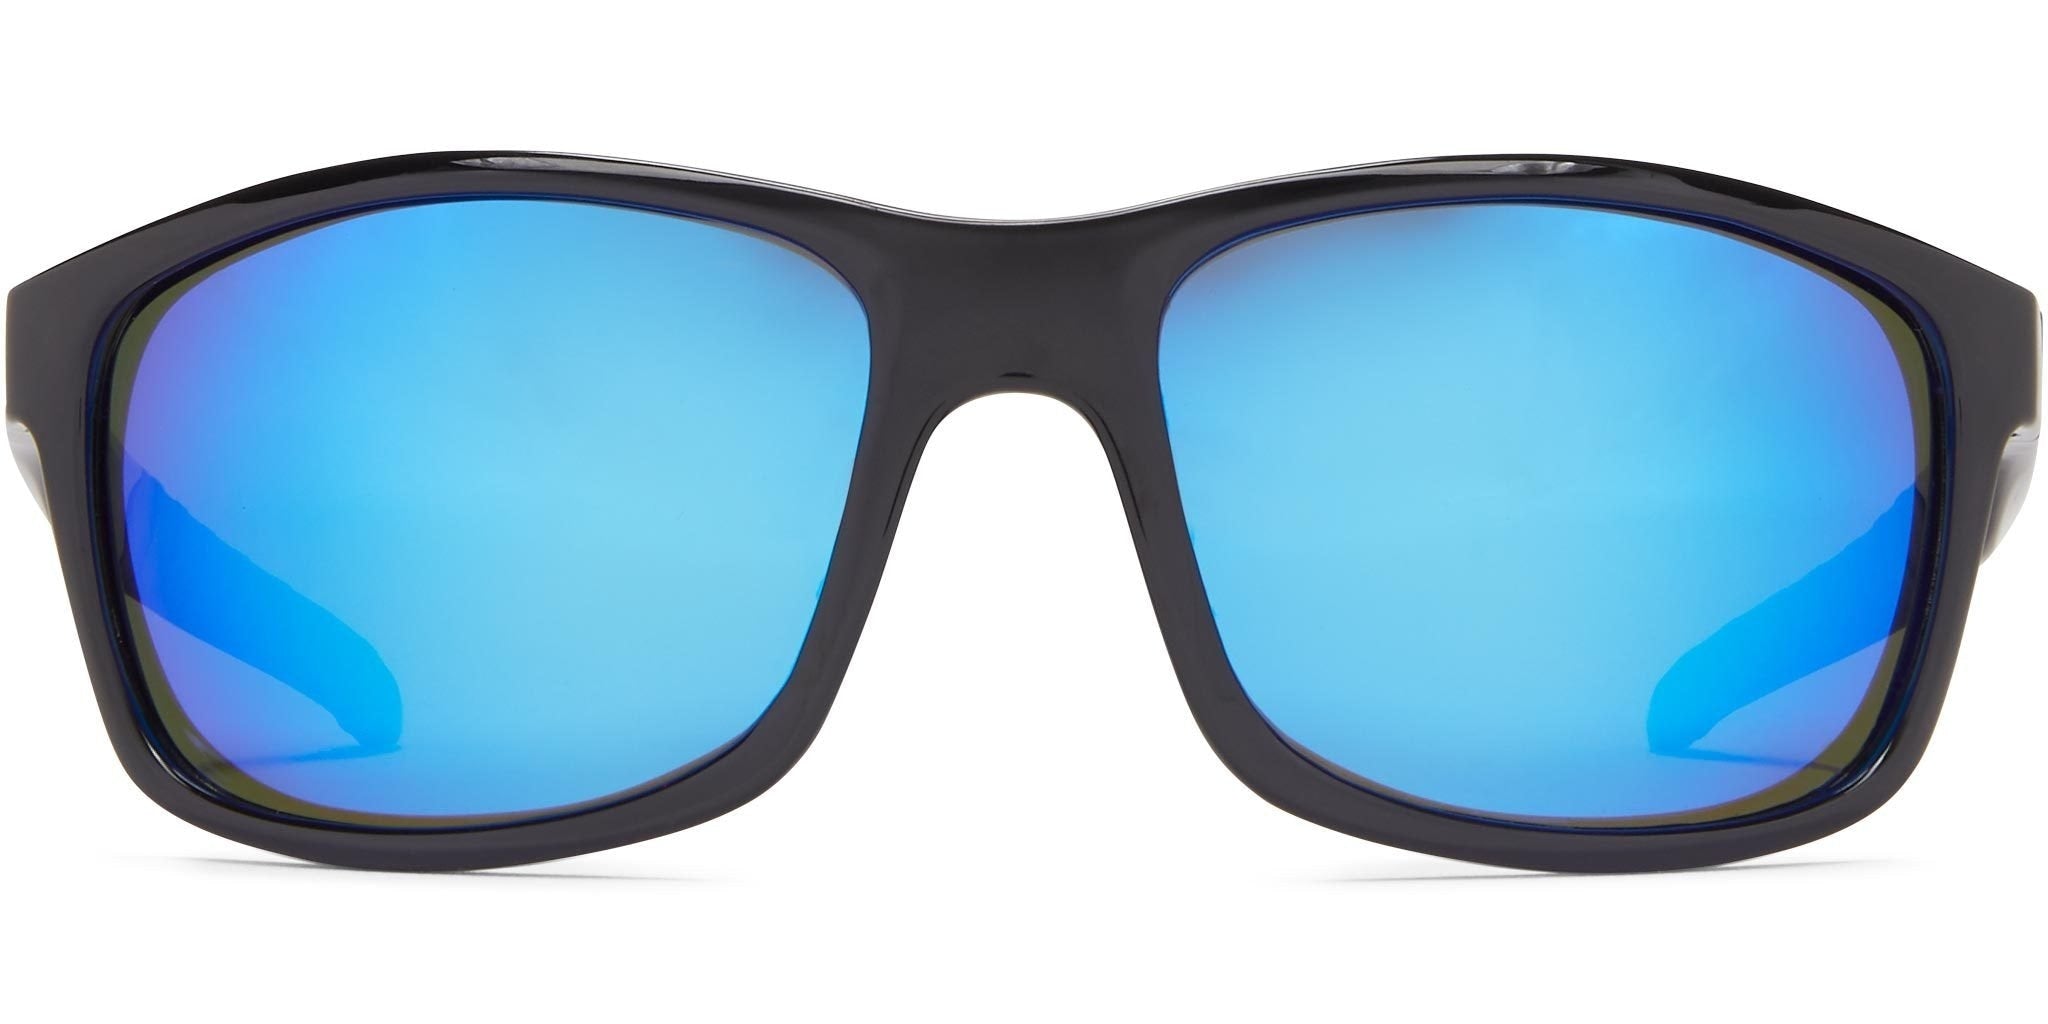 Sunglasses – WX COVERT Polarized Blue Mirror | Wiley X